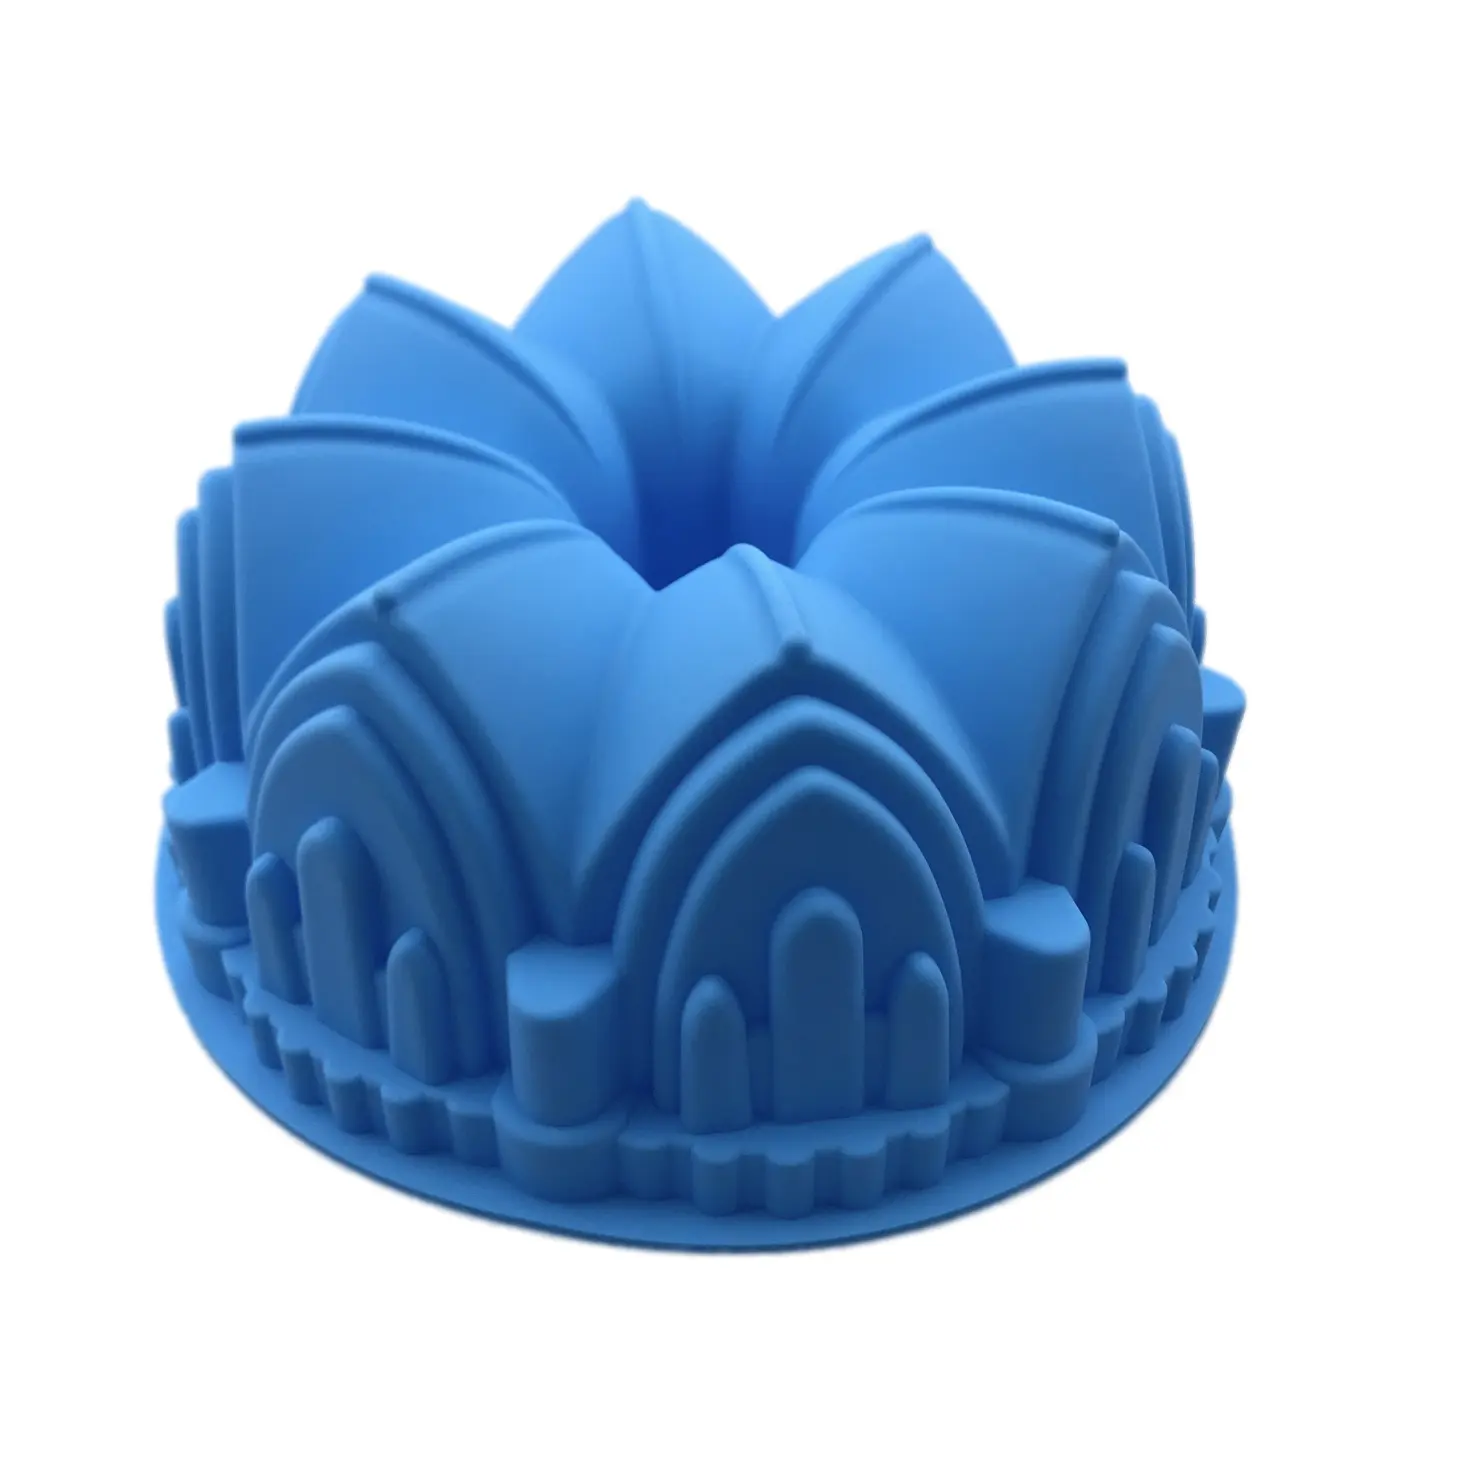 Desain 8.5 Inci Cetakan Kue Dekorasi Kue, Peralatan Memanggang Silikon Besar Cetakan Kue Kastil Rumah Bulat Alat Fondant Cetakan Kue Silikon